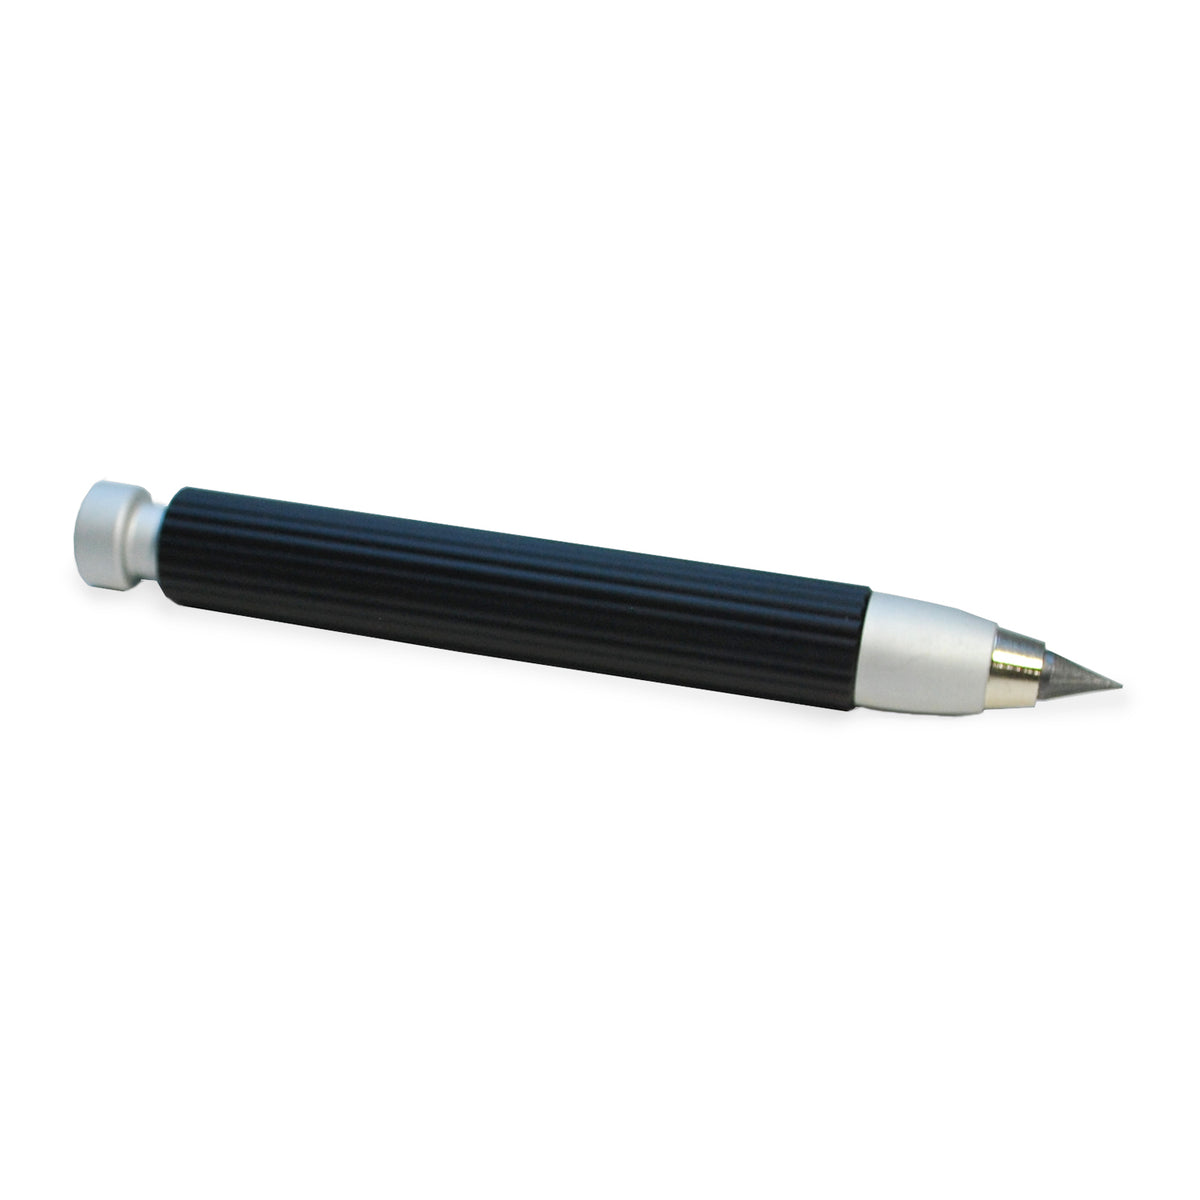 Worther Profil 5.6mm Mechanical Pencil- Black